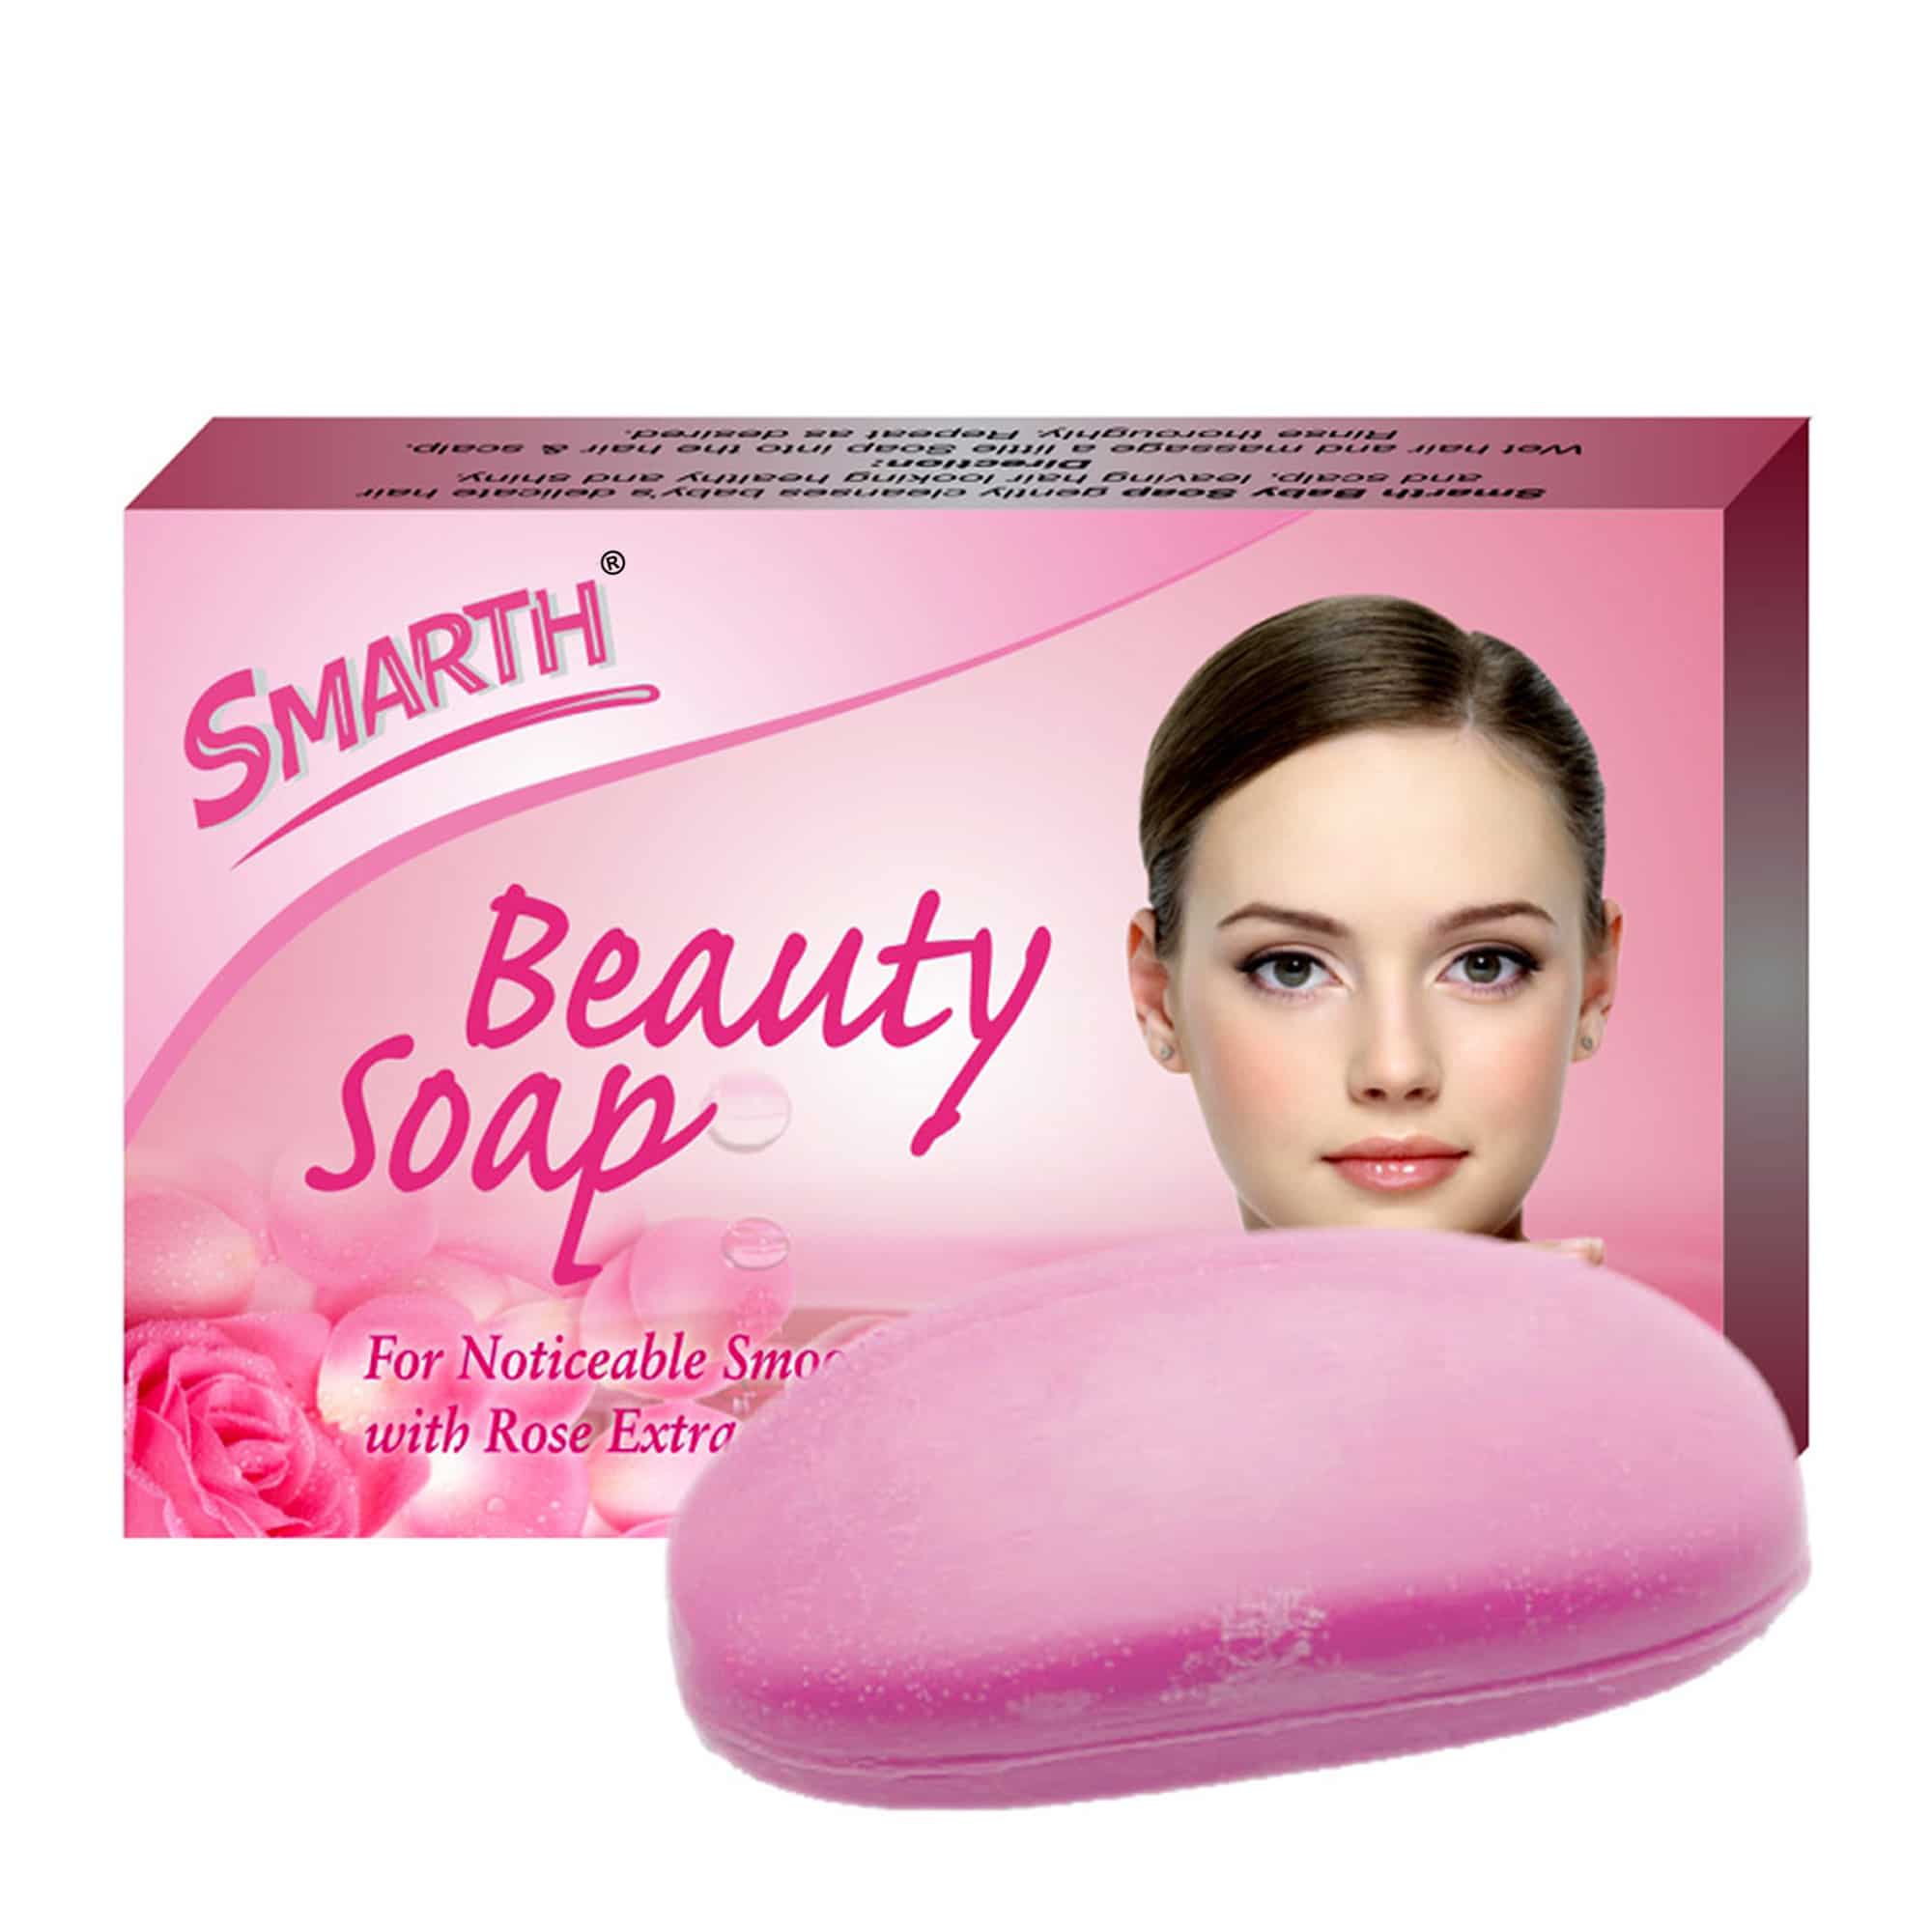 Rose Beauty Soap